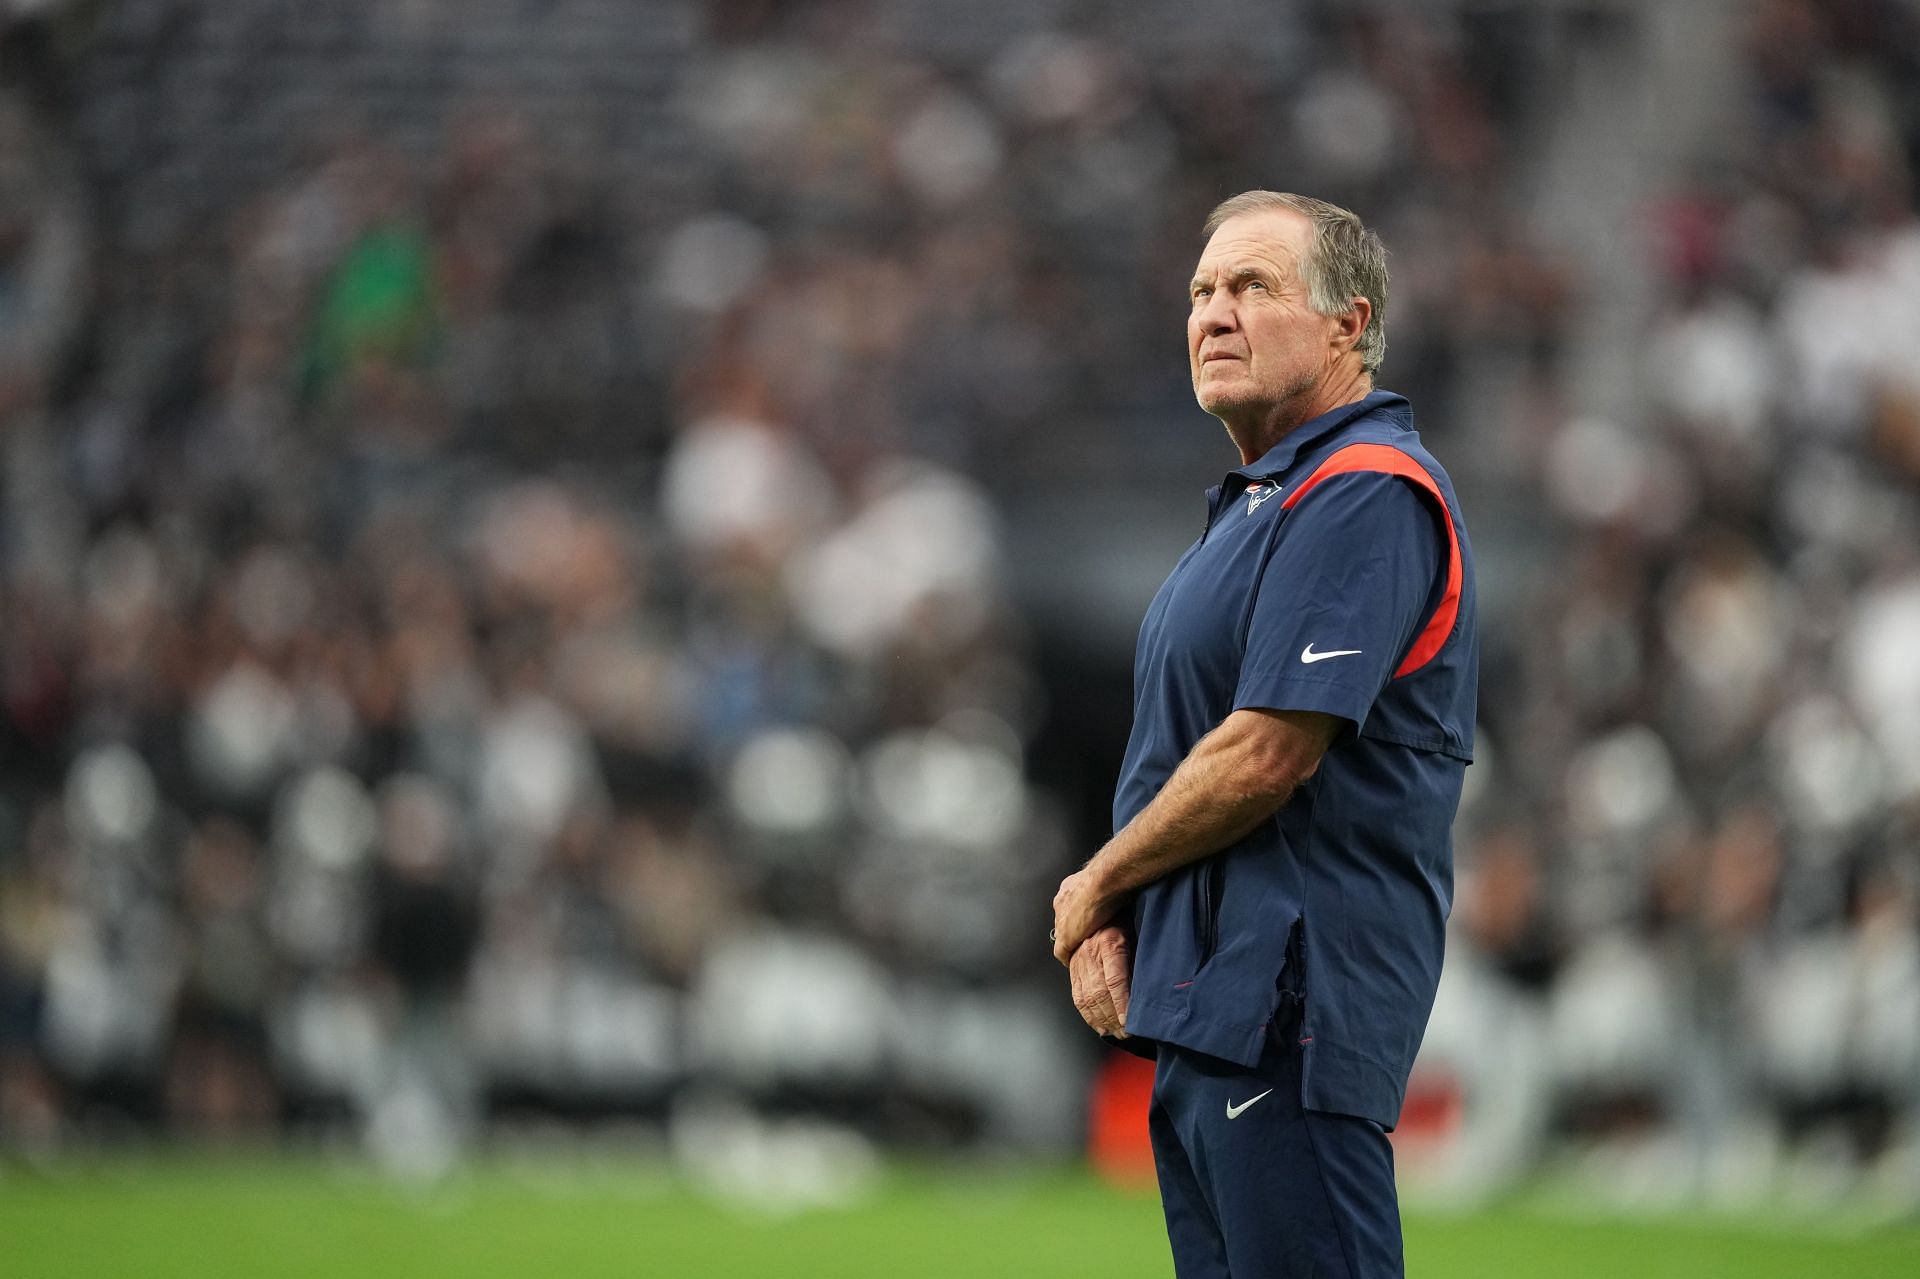 Bill Belichick, head coach of the New England Patriots